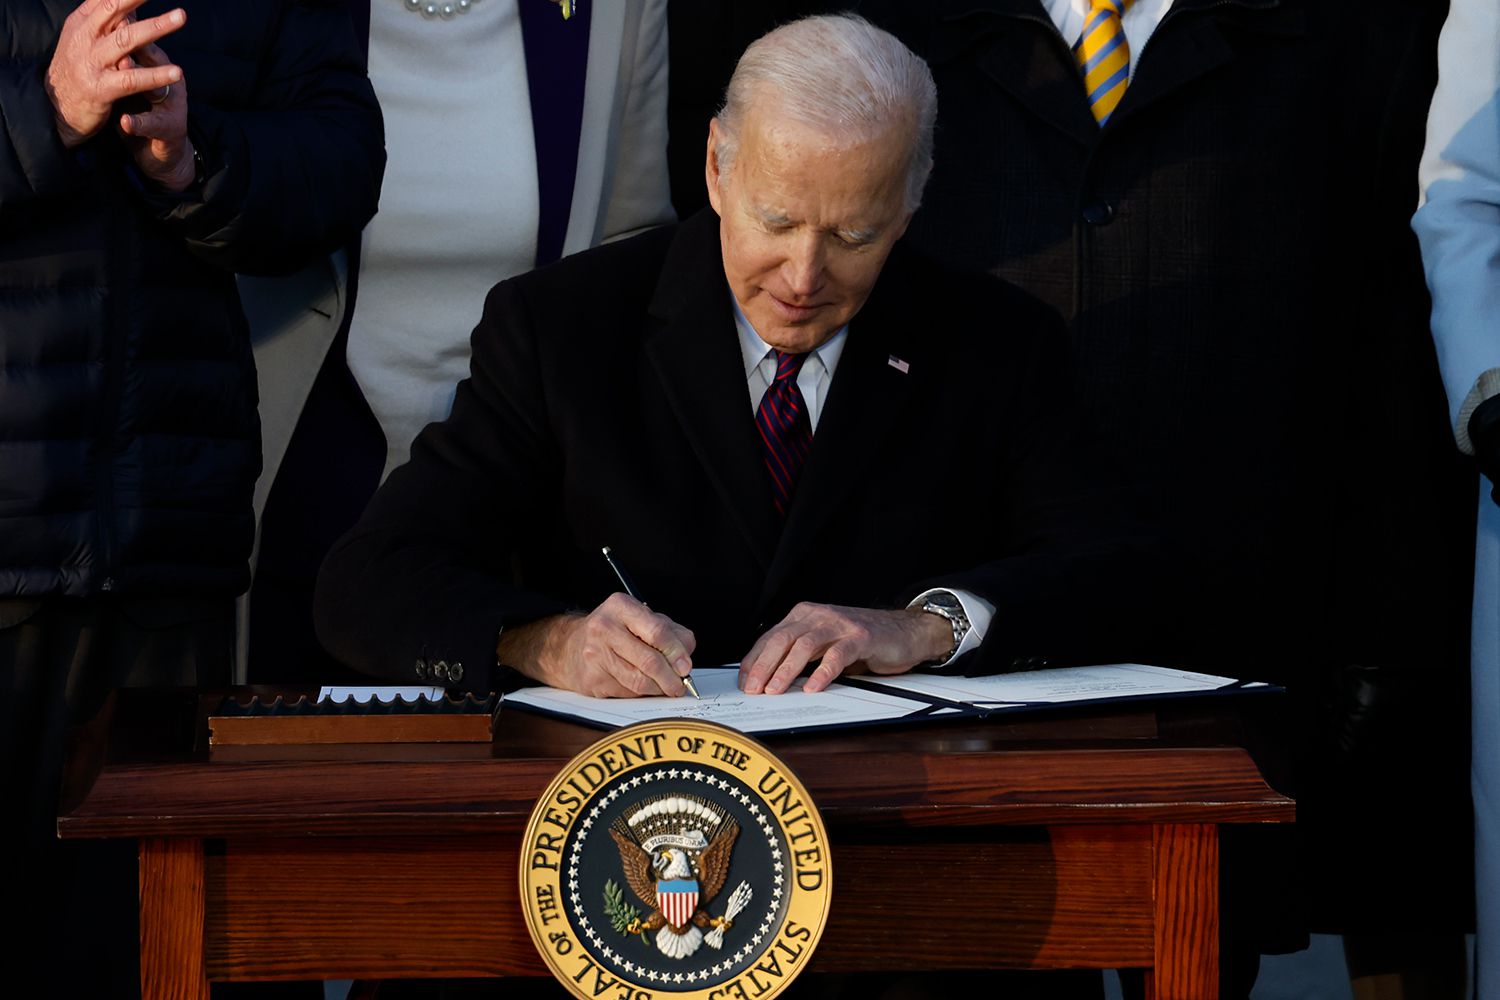 US President Joe Biden Signs Same-S3x Marriage Bill